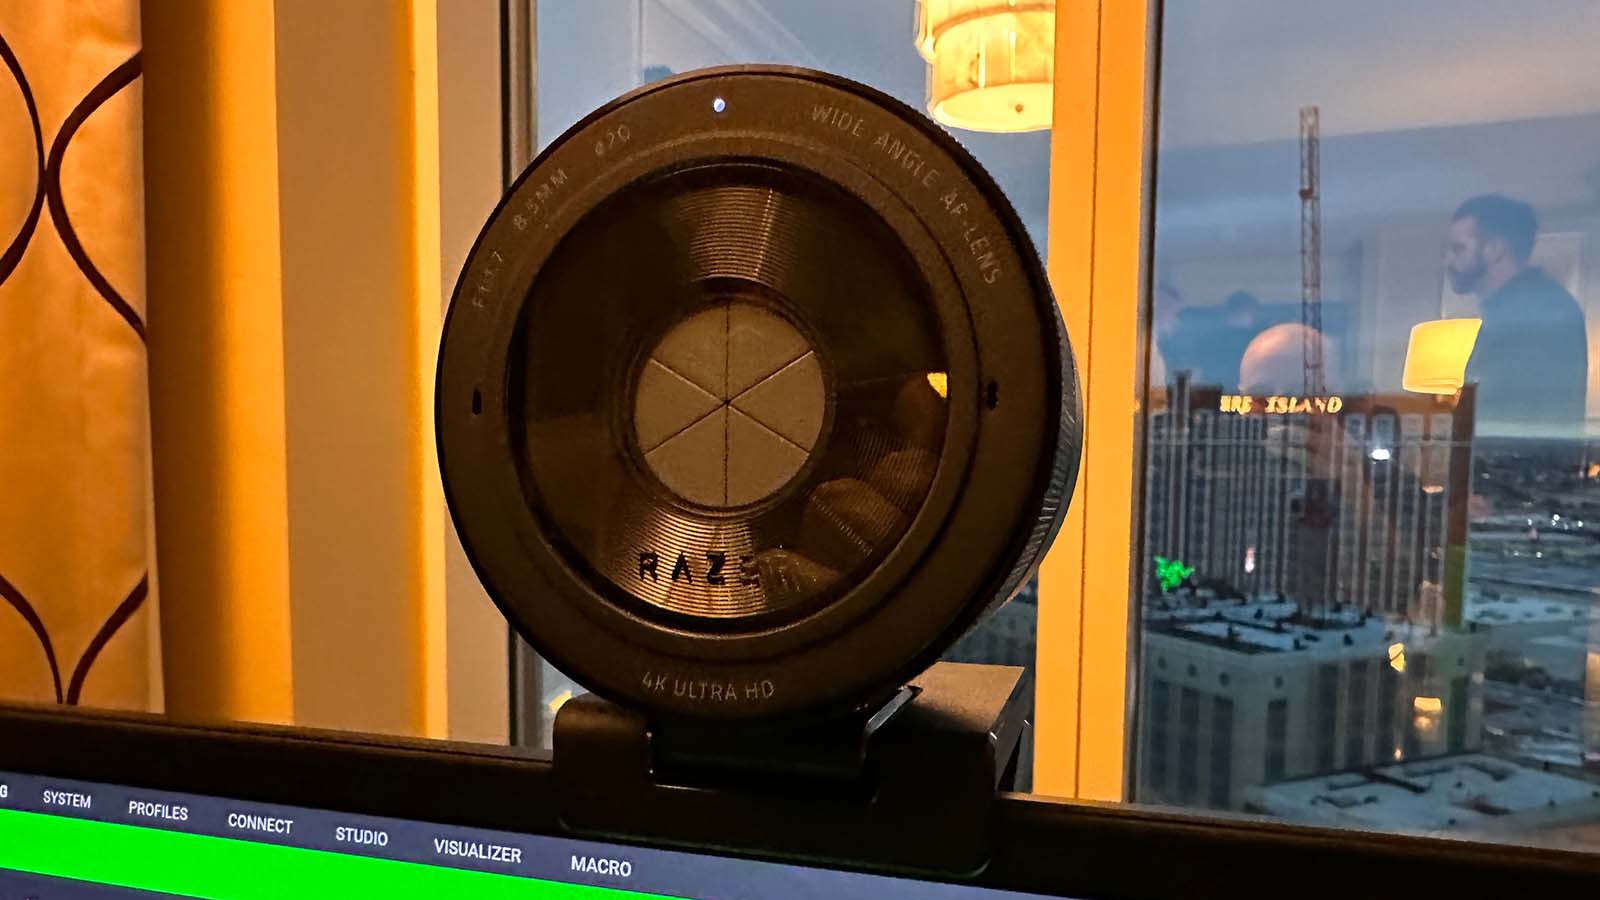 Razer Kiyo Pro Ultra has the Biggest Sensor Ever Put in a Webcam